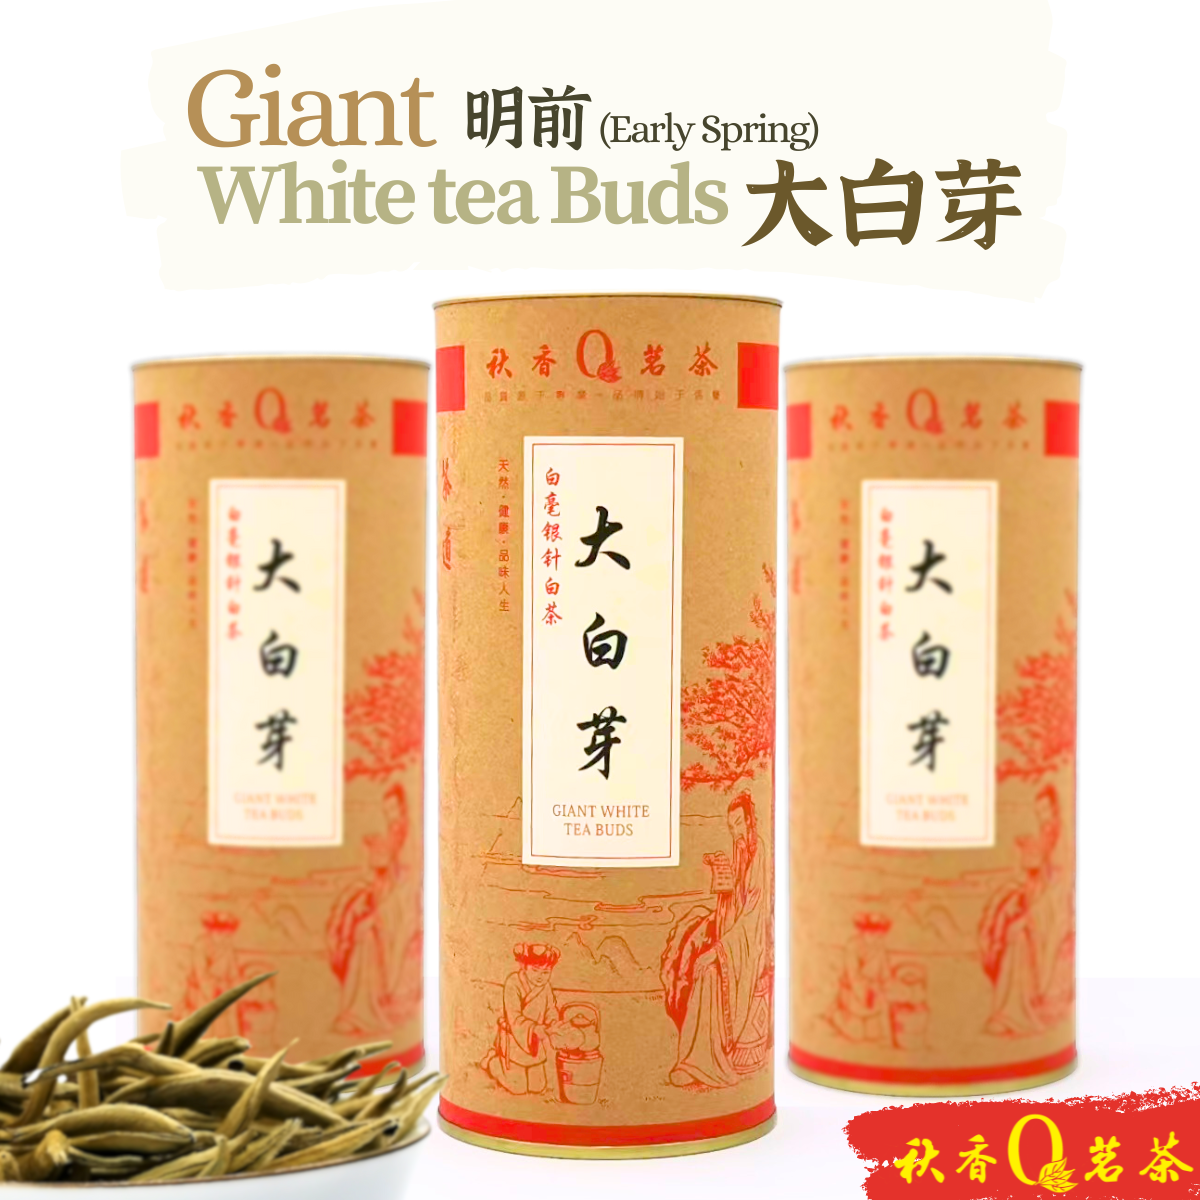 明前大白芽 Giant White tea Buds (Early Spring)【100g】｜【白茶 White tea】